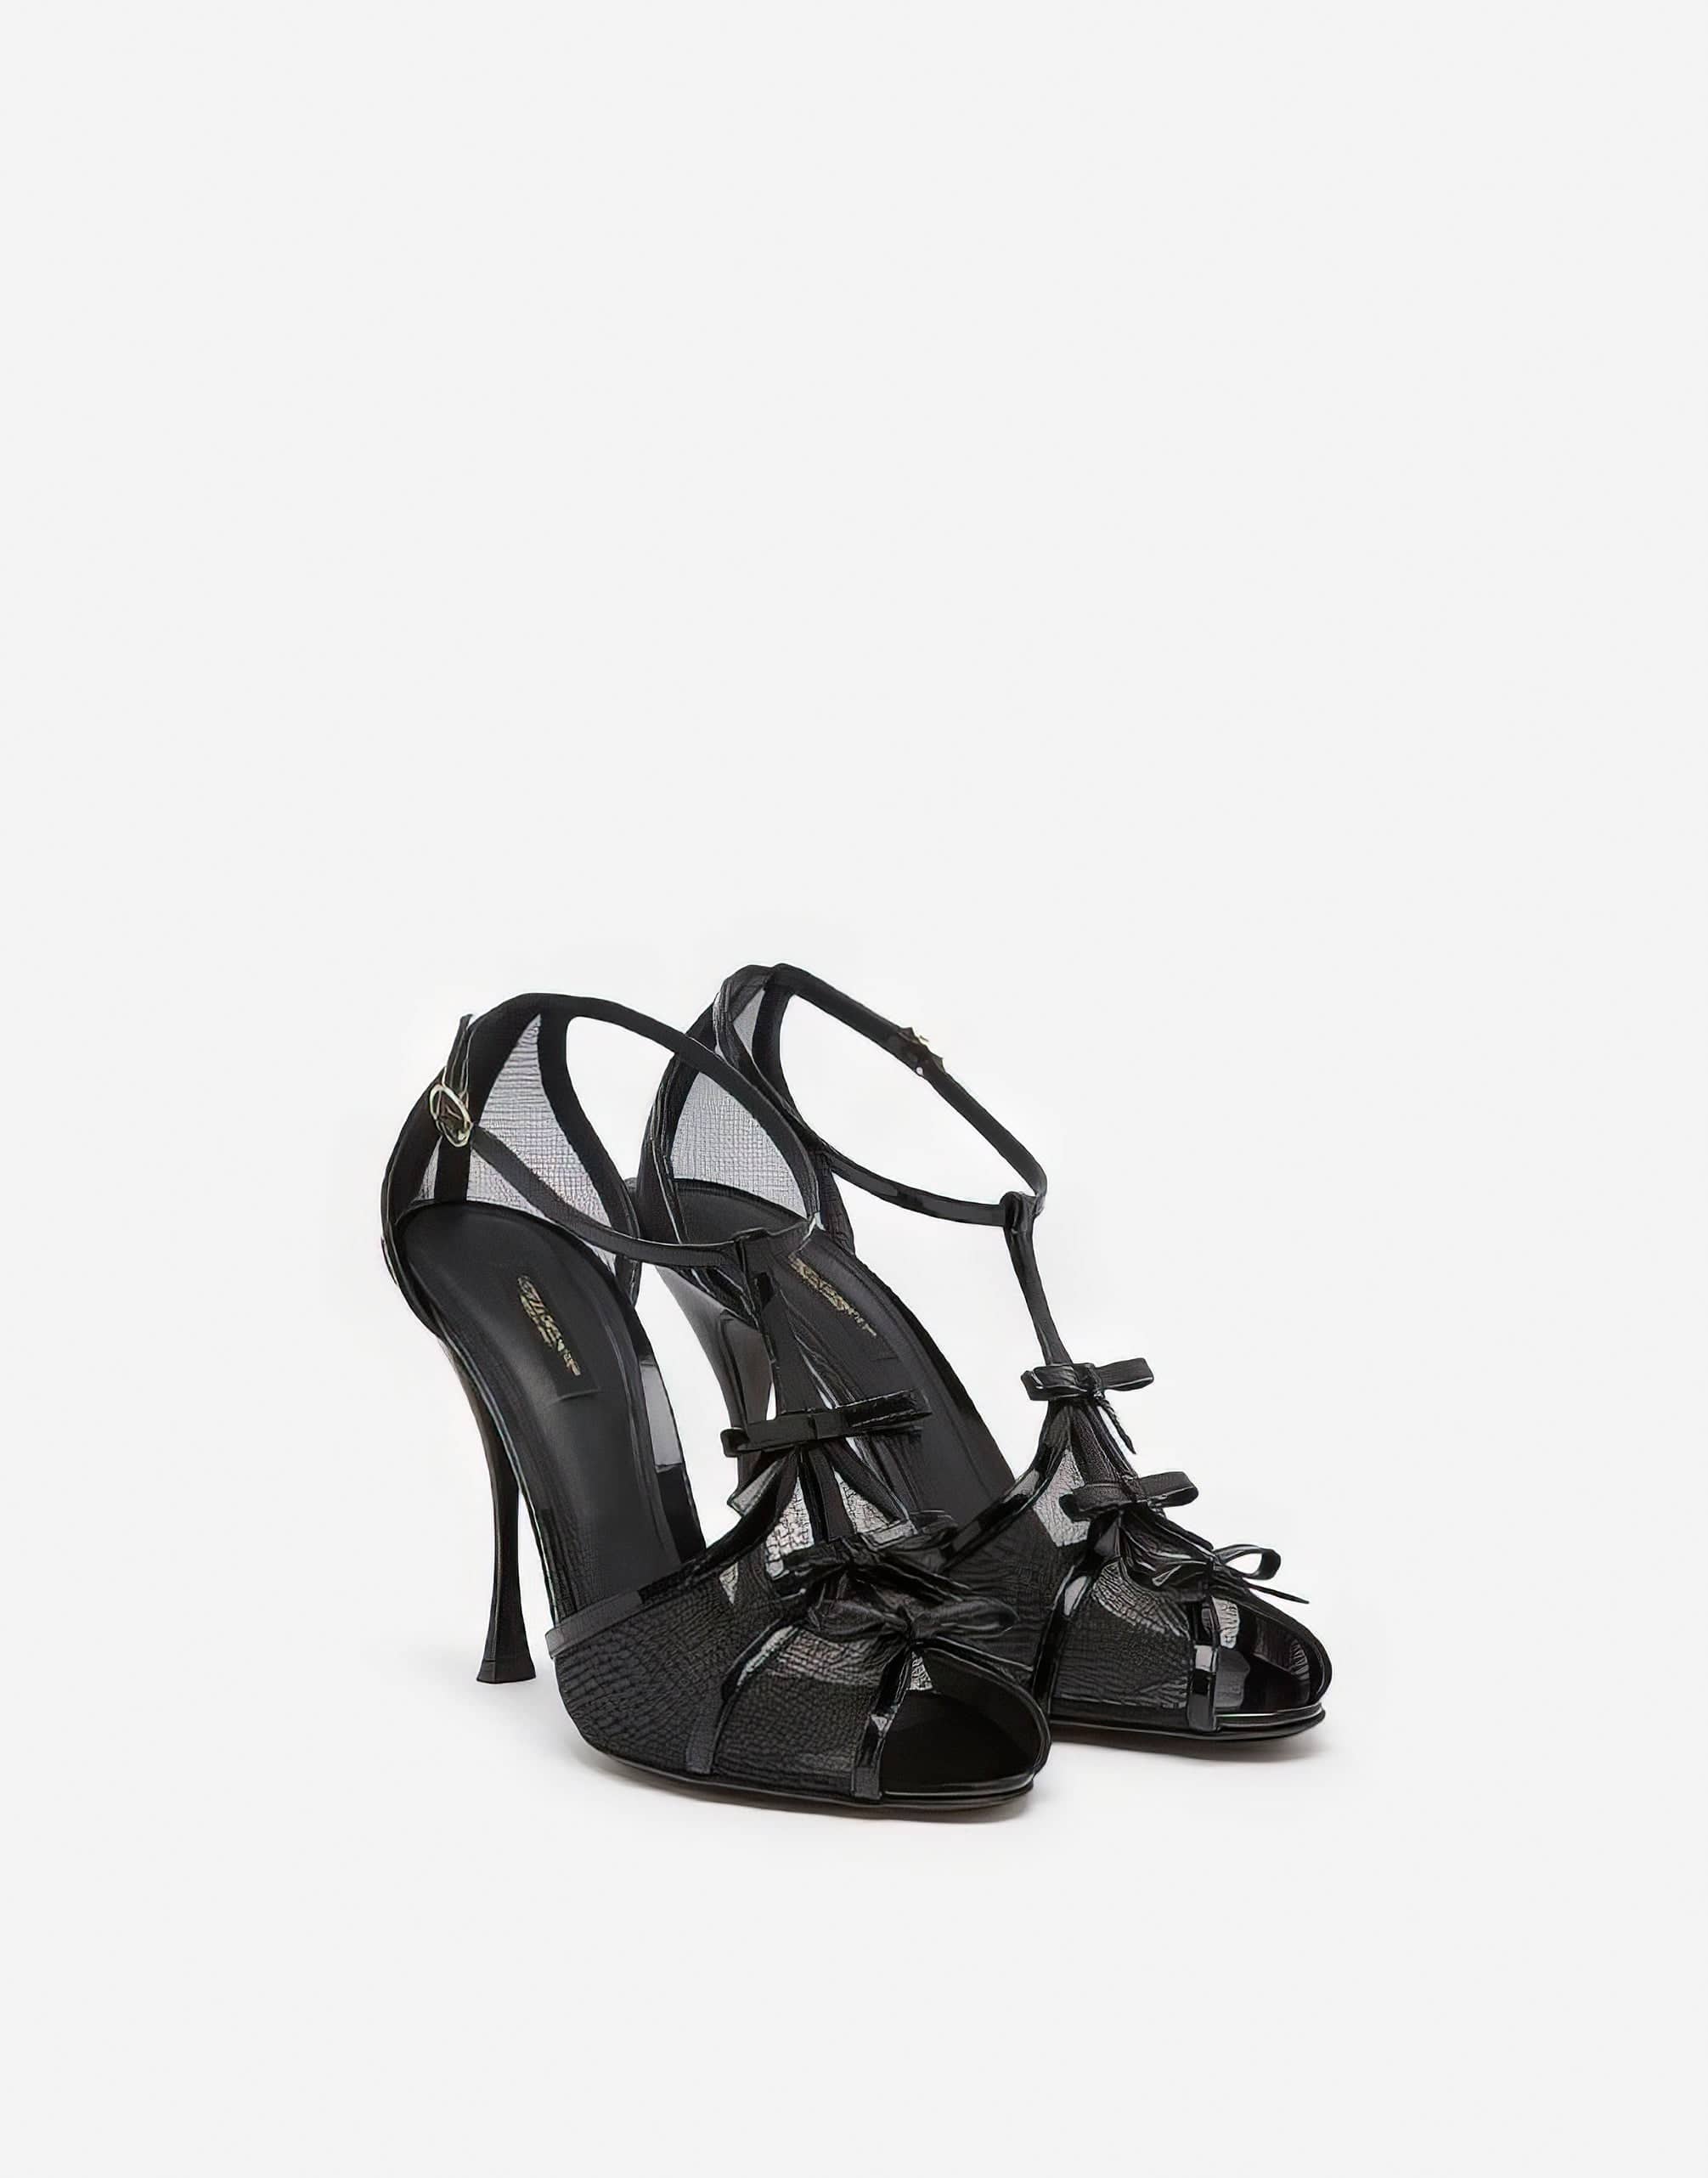 Dolce & Gabbana Small Bows Mesh Sandals